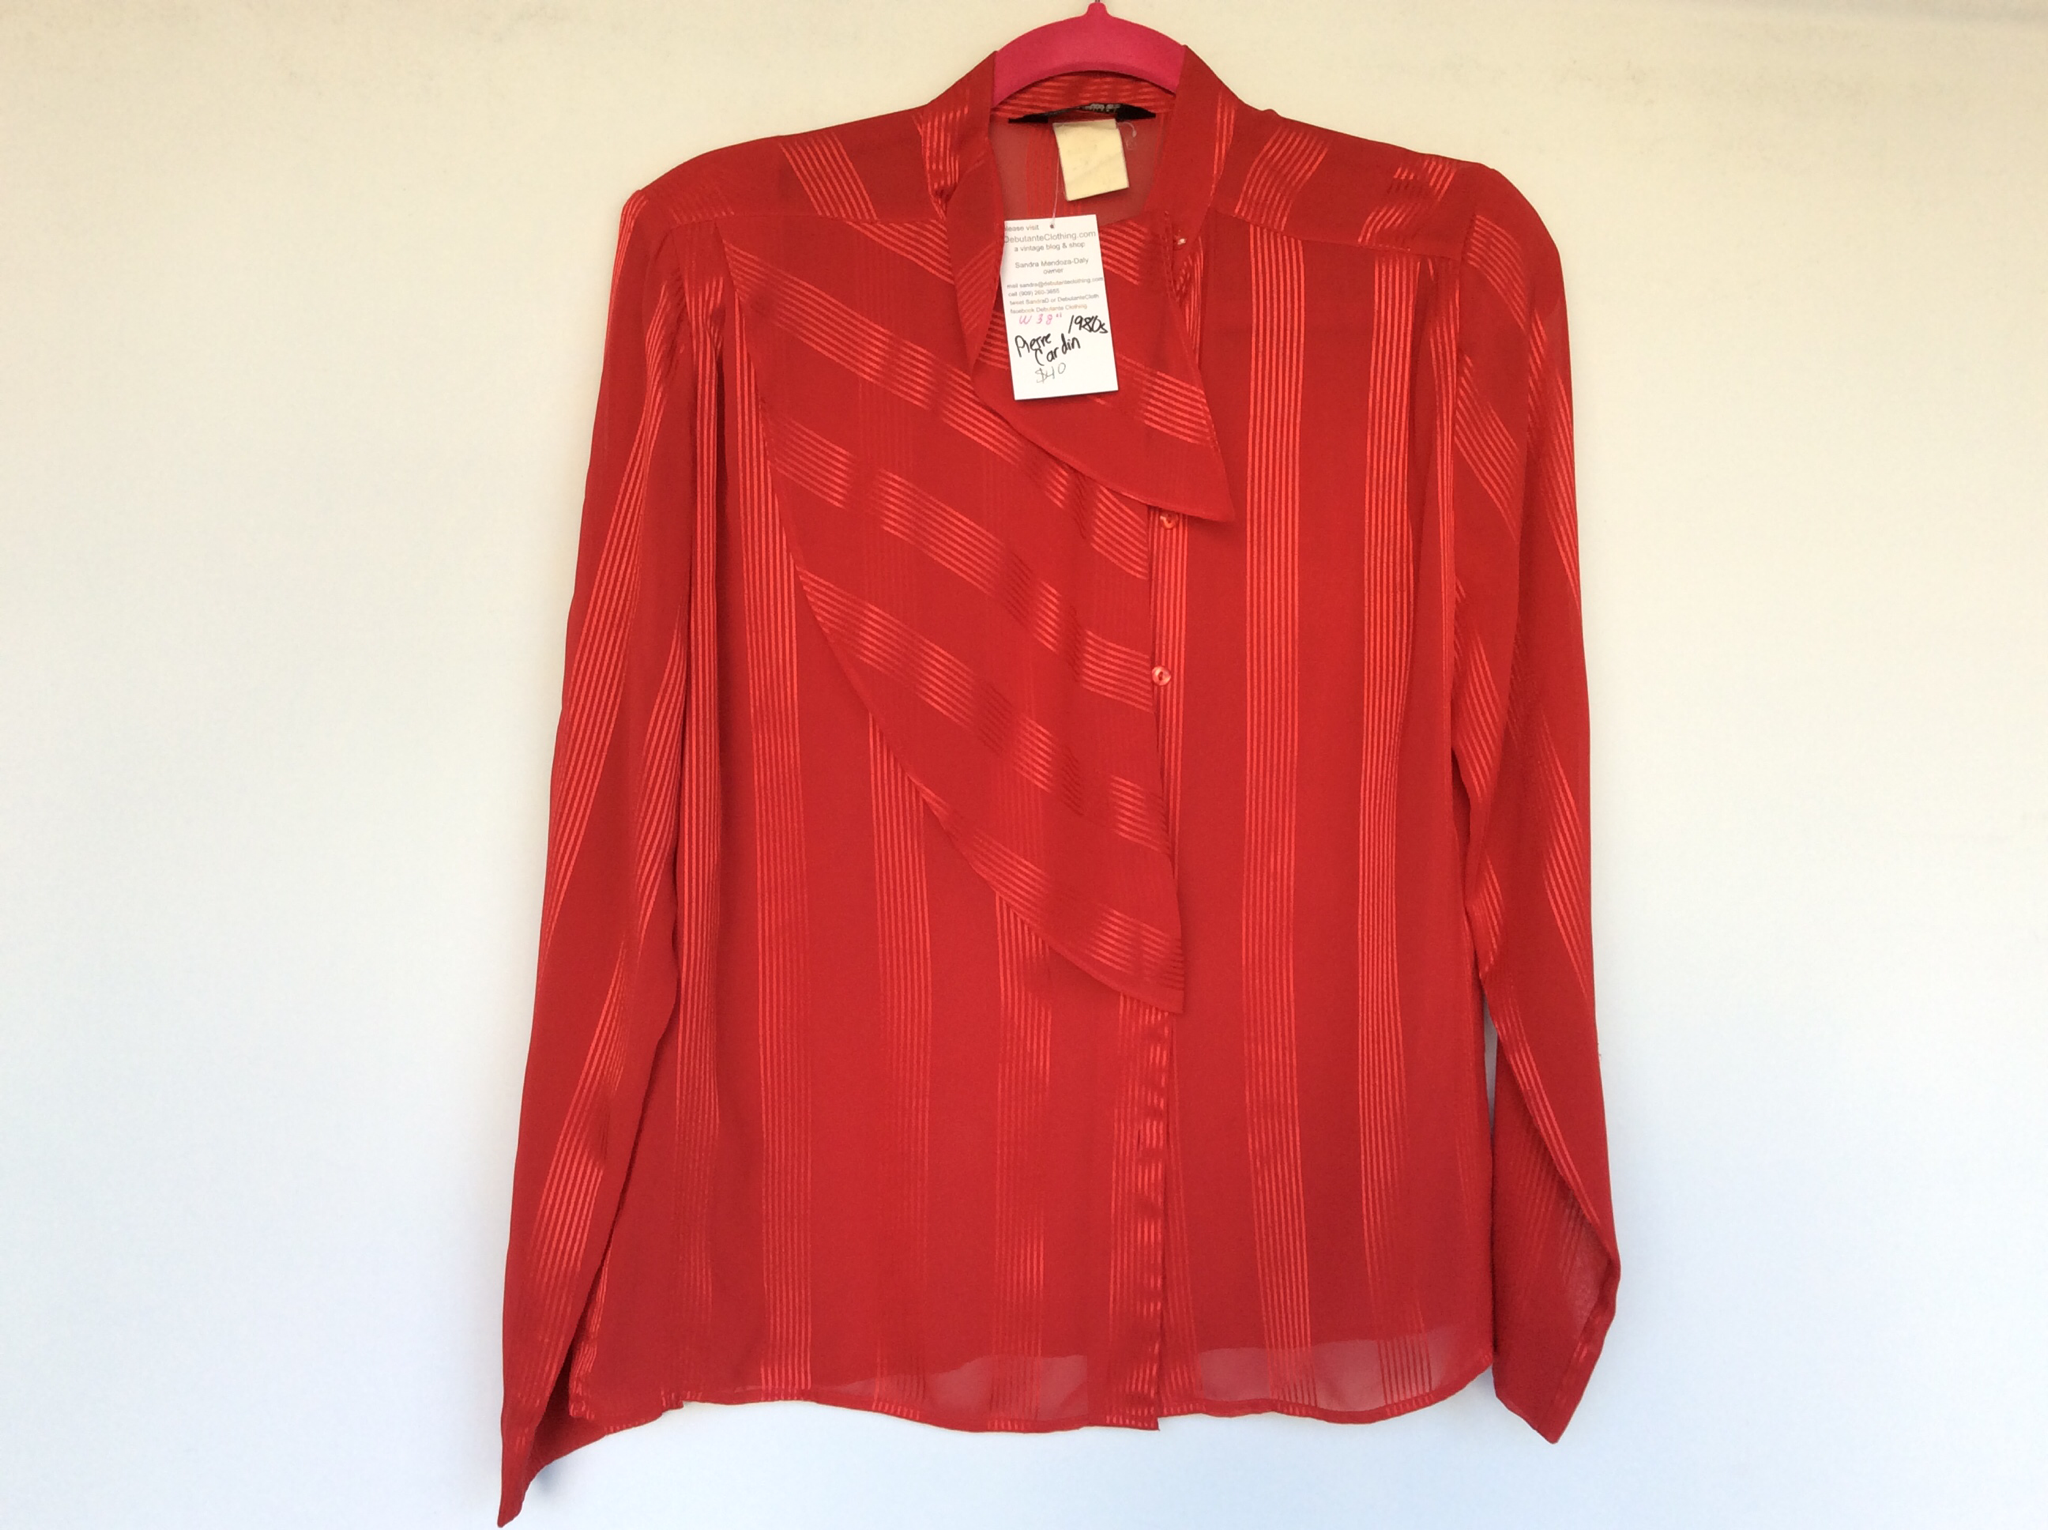 1980 Pierre cardin  red blouse